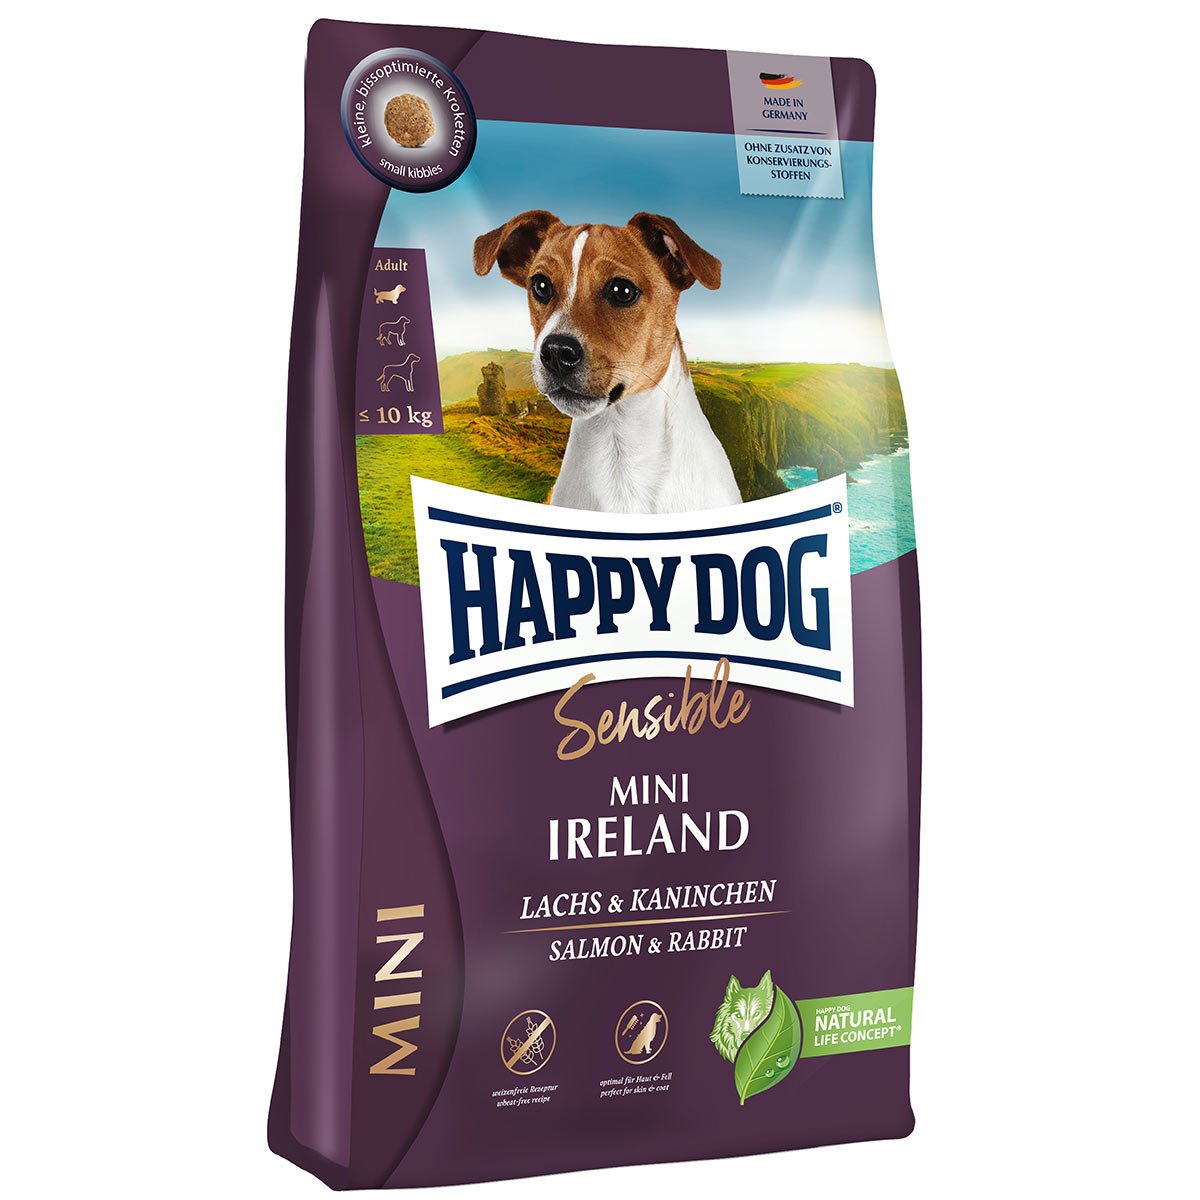 Happy Dog Sensible Mini Ireland 800g